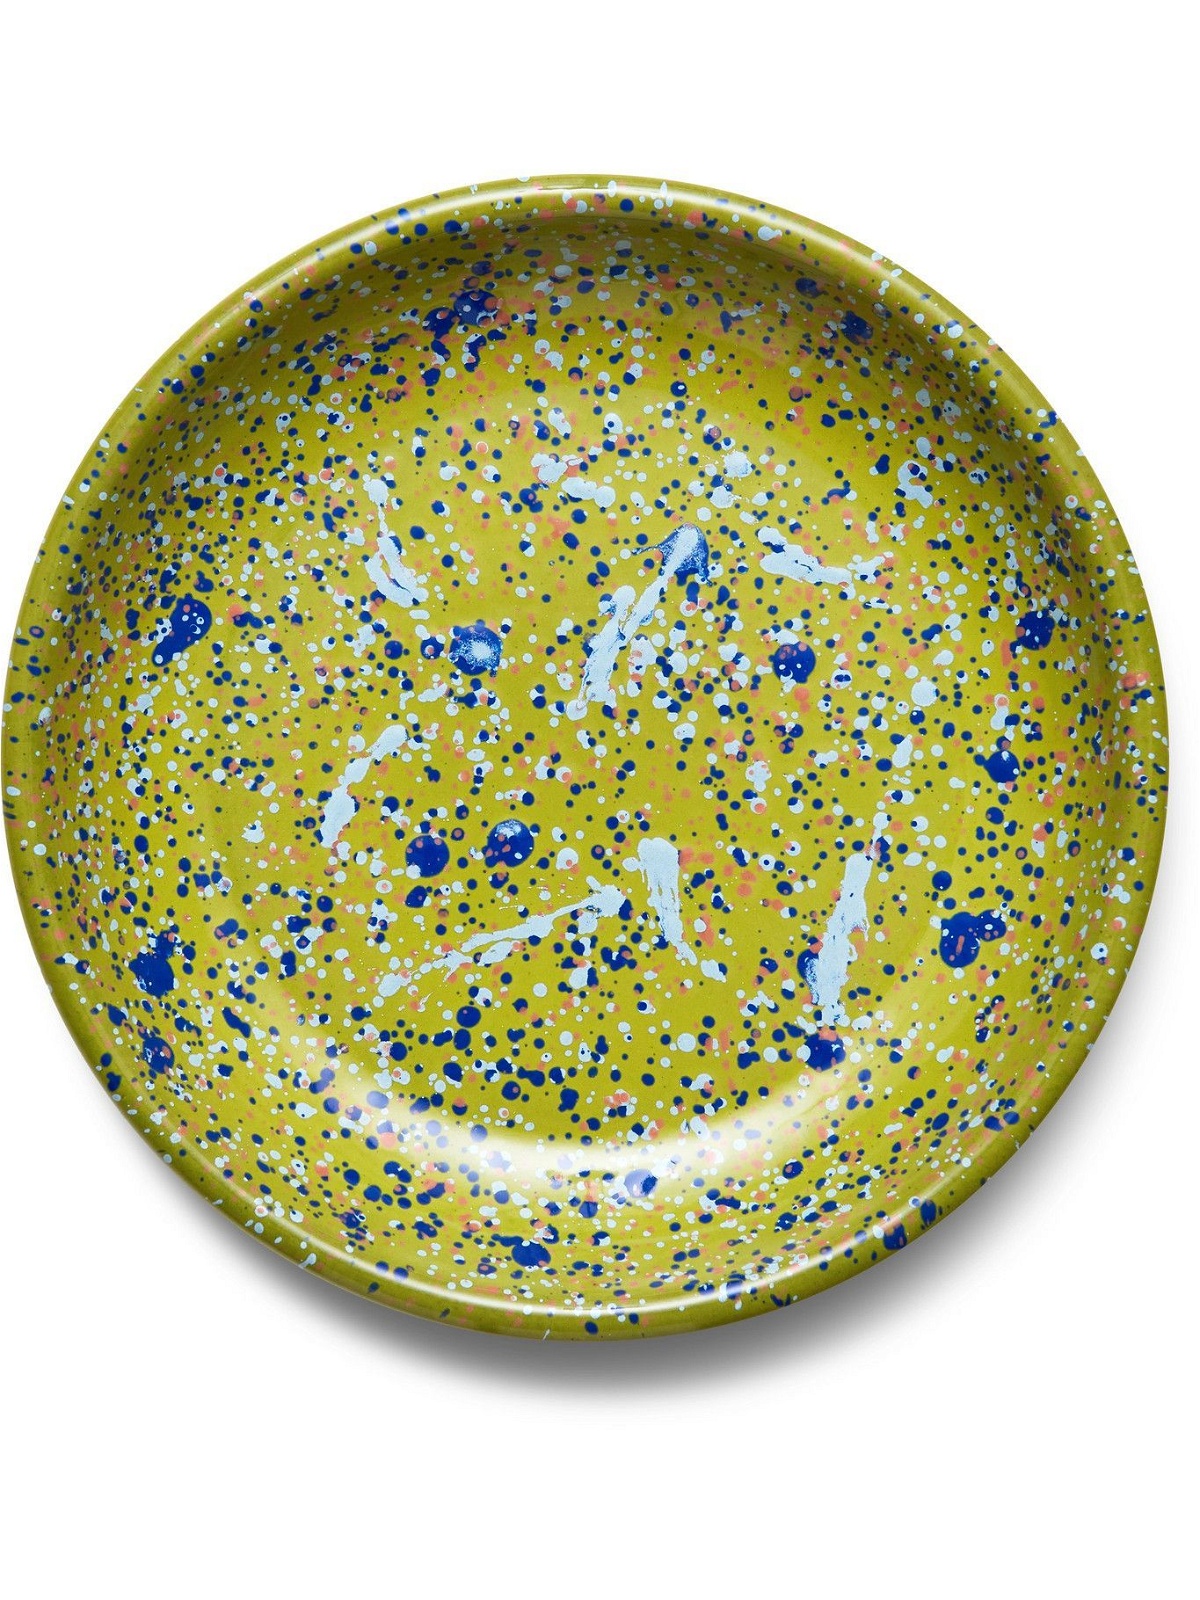 BORNN - Island Breeze Large Splattered Enamelware Plate, 26cm